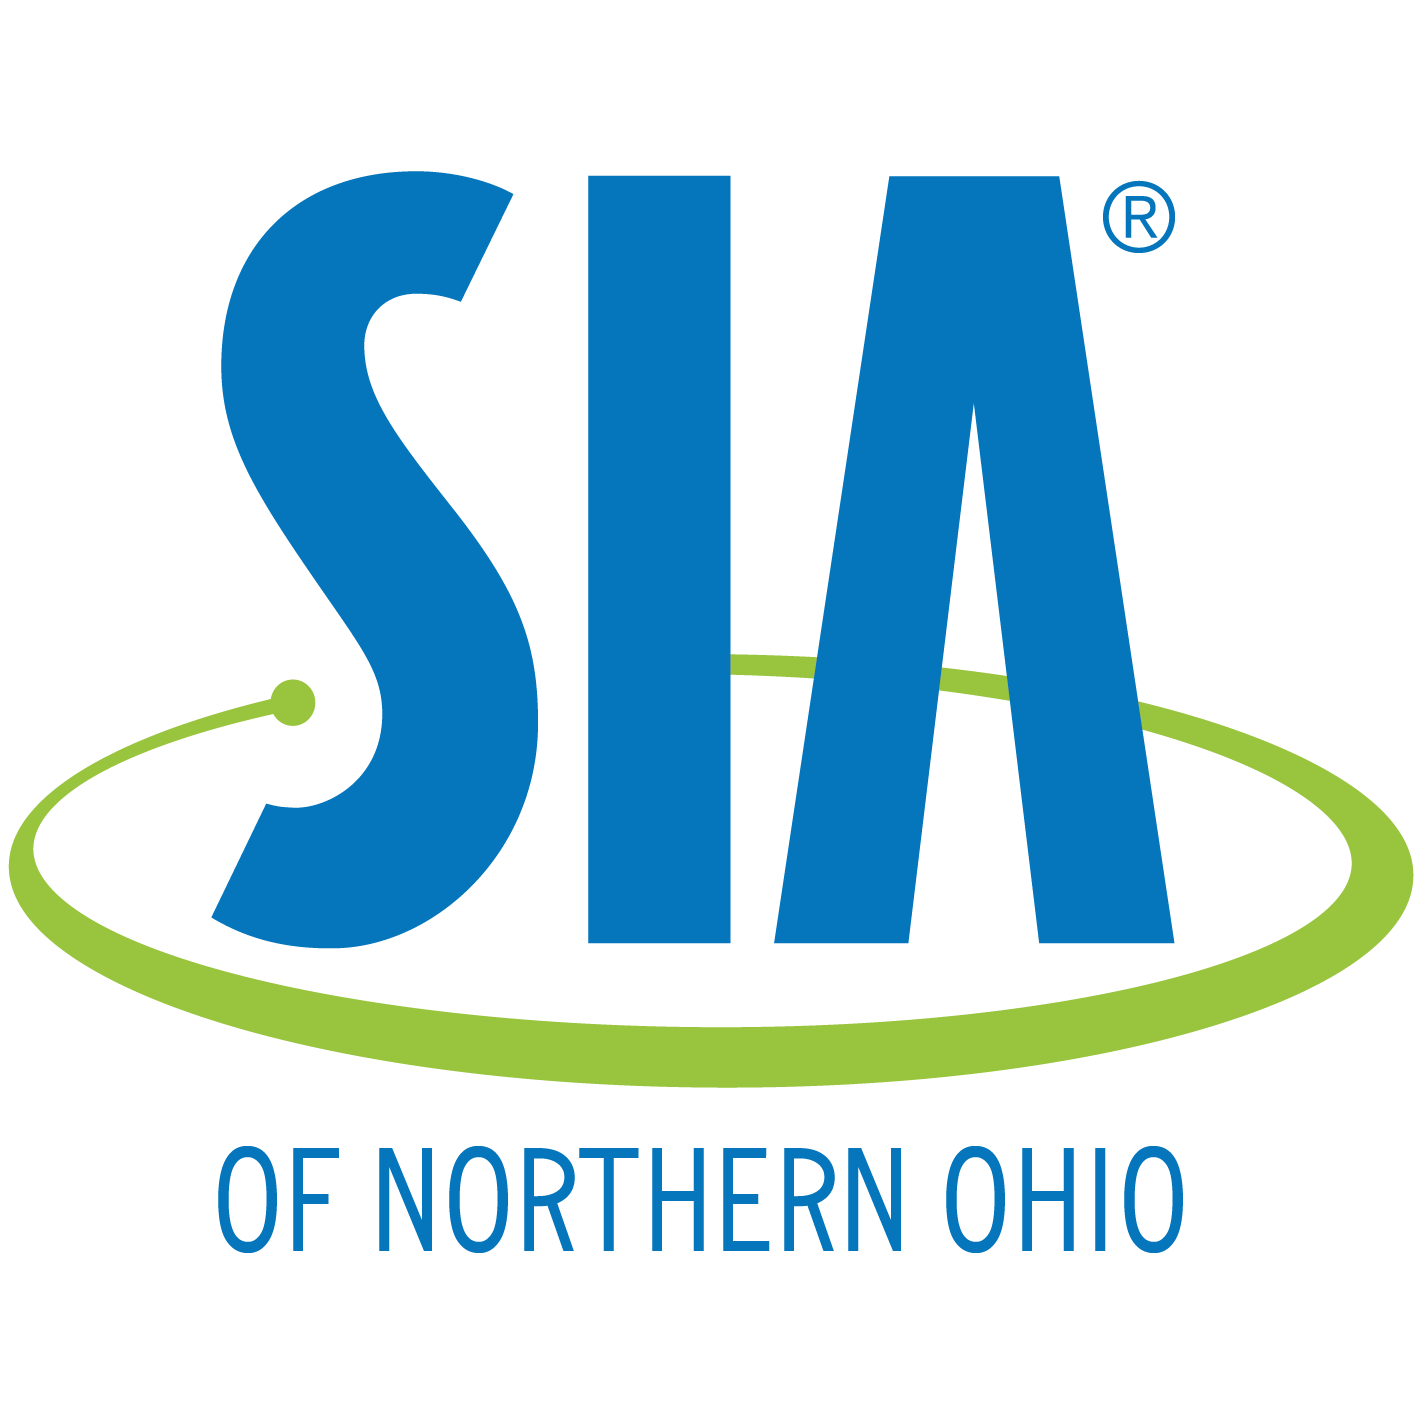 SIA of Northern Ohio